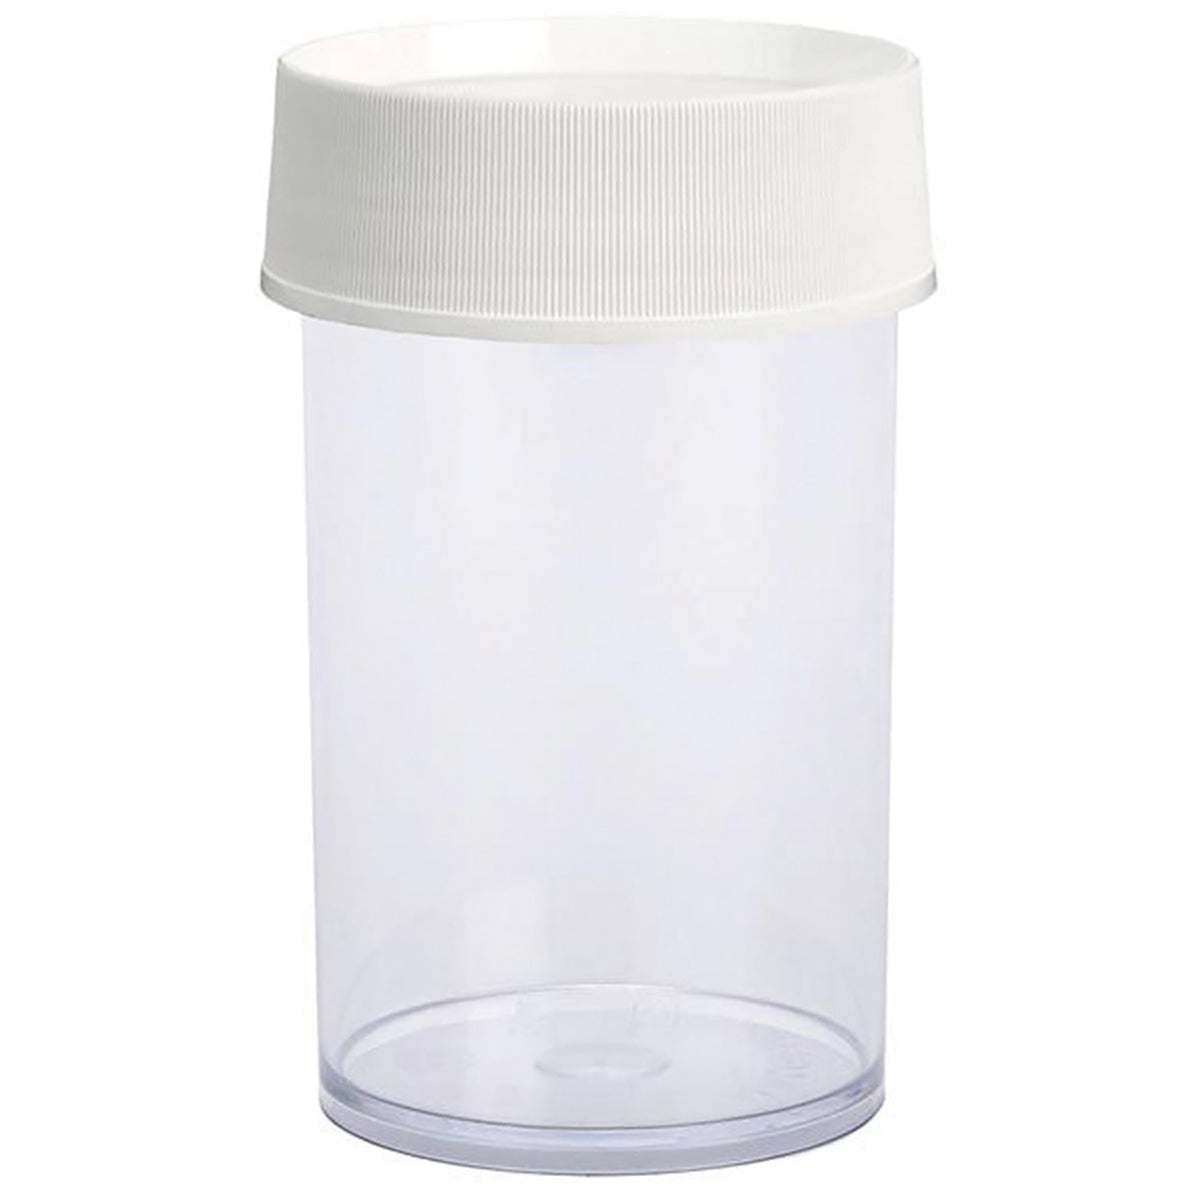 Nalgene Polypropylene Wide Mouth Storage Jar - Clear Nalgene